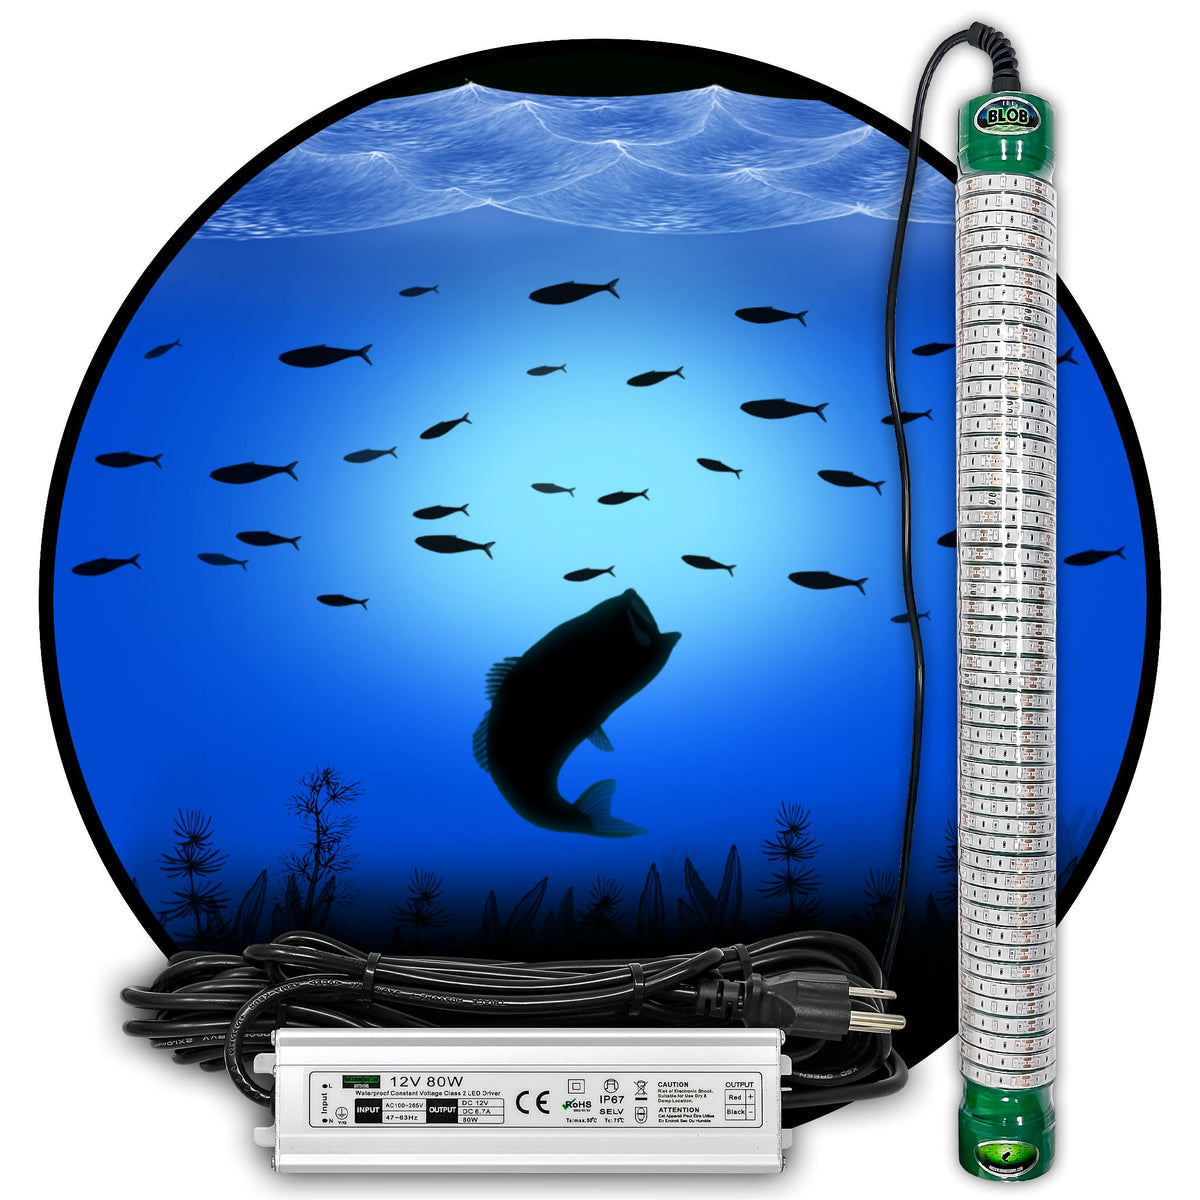 Green Blob Jumbo BLOB 30000 Lumens 600 LED Underwater Fishing Light for Docks 110 Volt AC with 3 Prong Plug Sports Green Blob Outdoors 